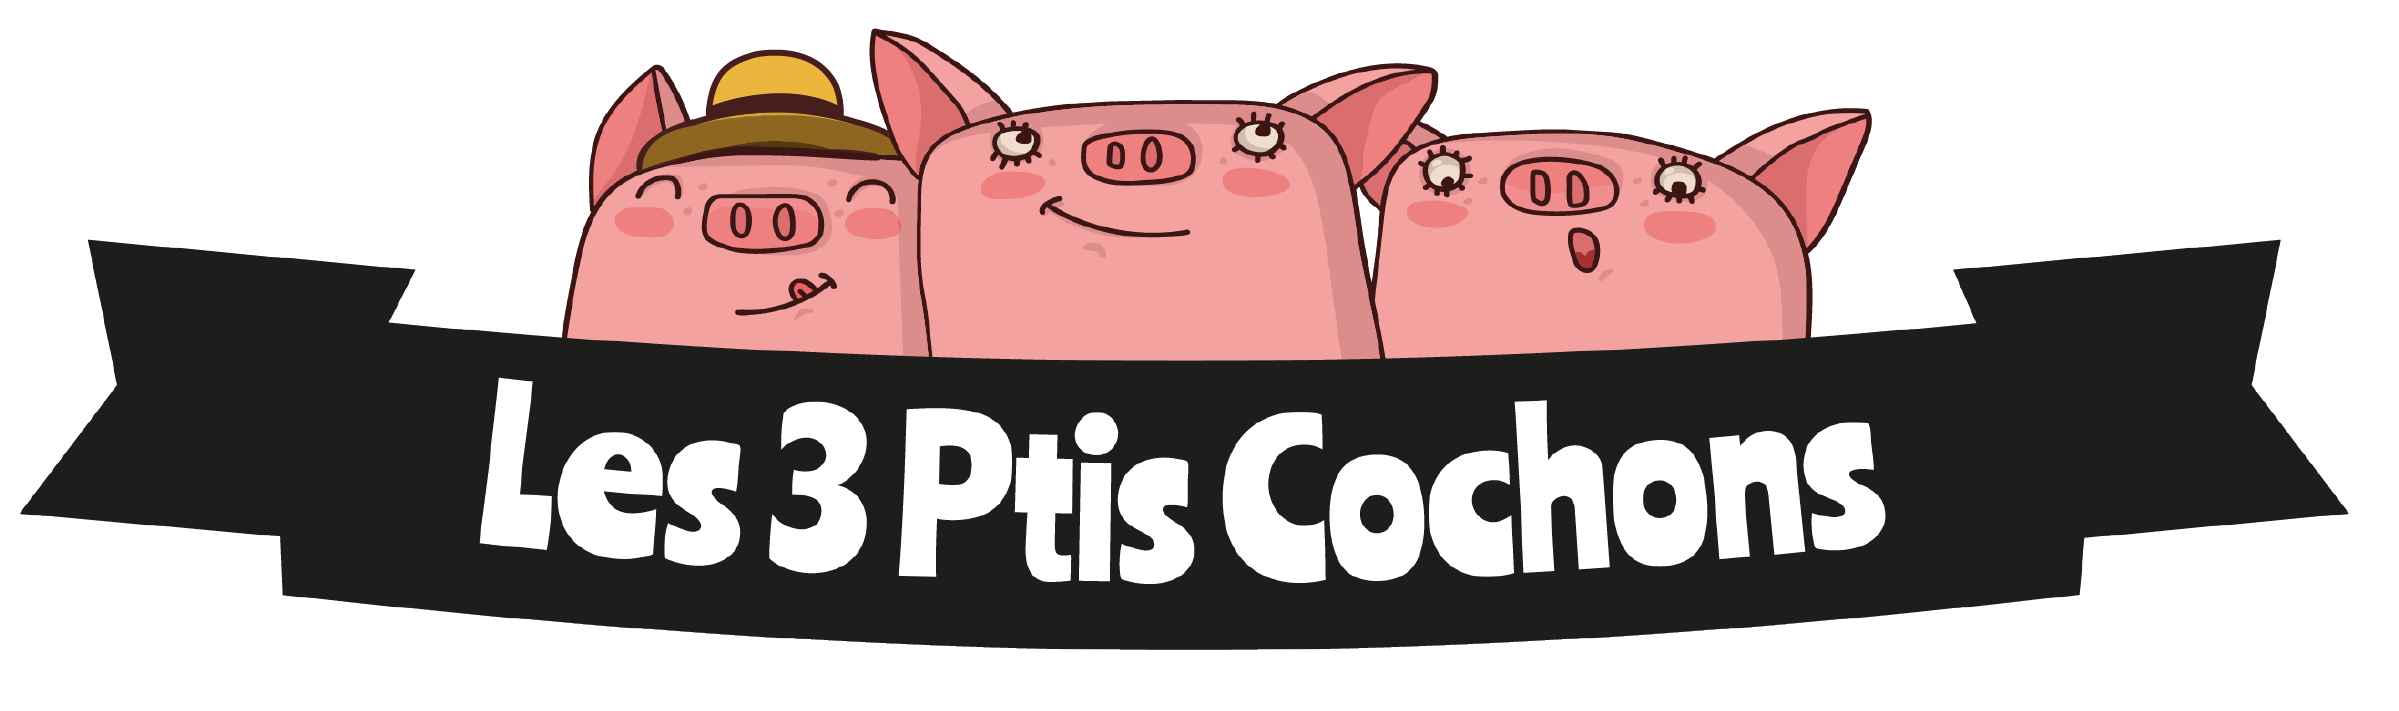 Les 3 pits cochons